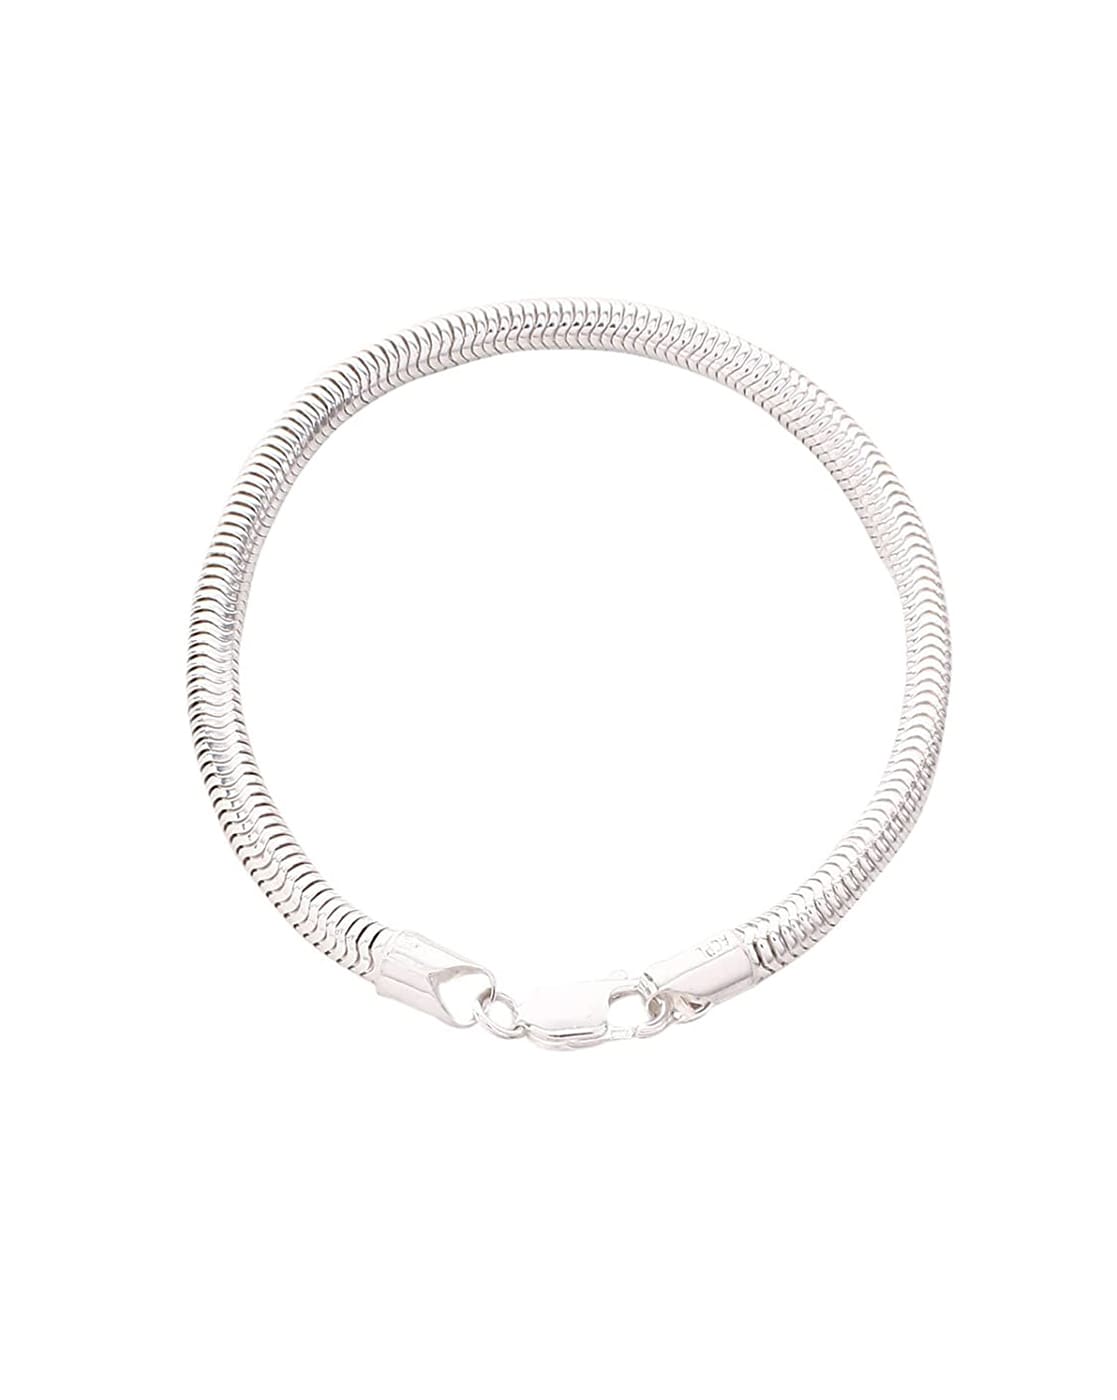 ATHZ legant Men Wrist Silver Chain Bracelet Heavy Thick Link Chain Bracelet  for Men Length 232 CM with Gift Box  Amazonin Fashion